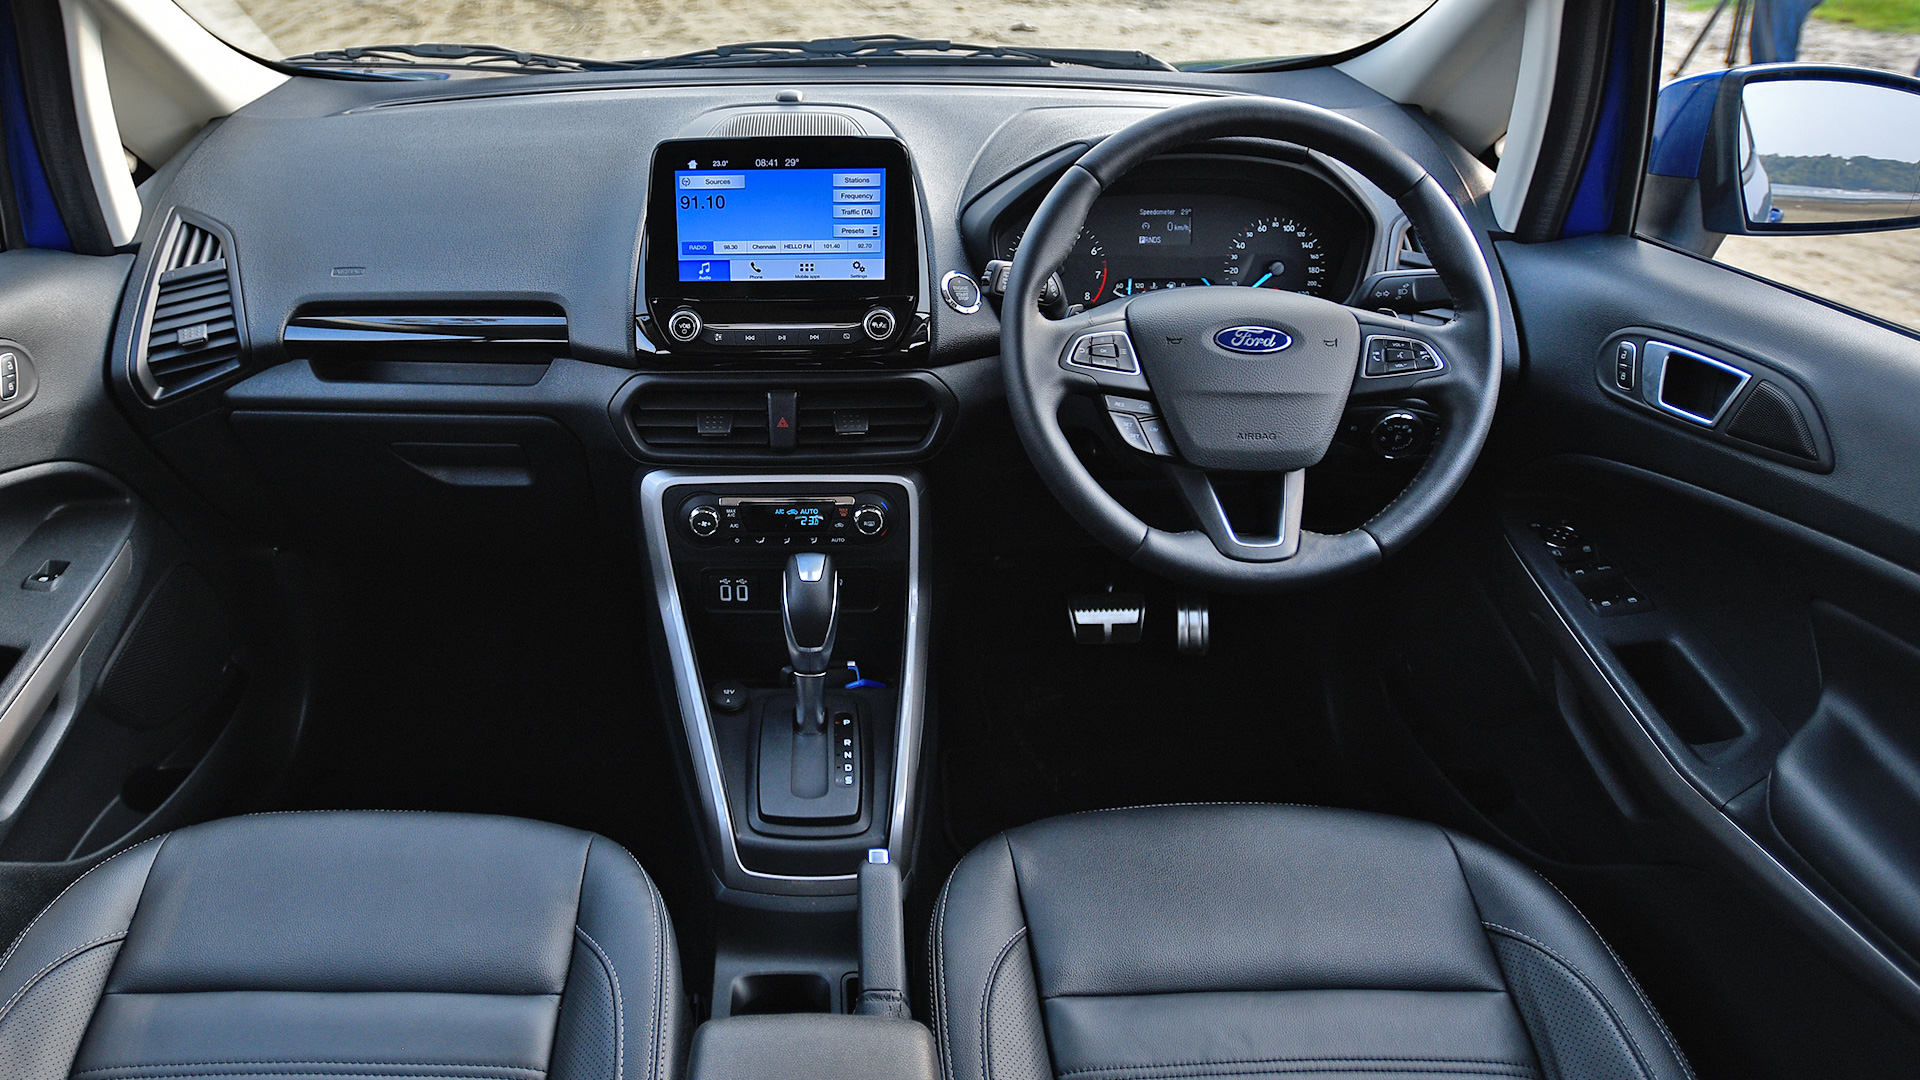 Ford Ecosport 2018 1.5 Diesel Platinum Interior Car Photos Overdrive